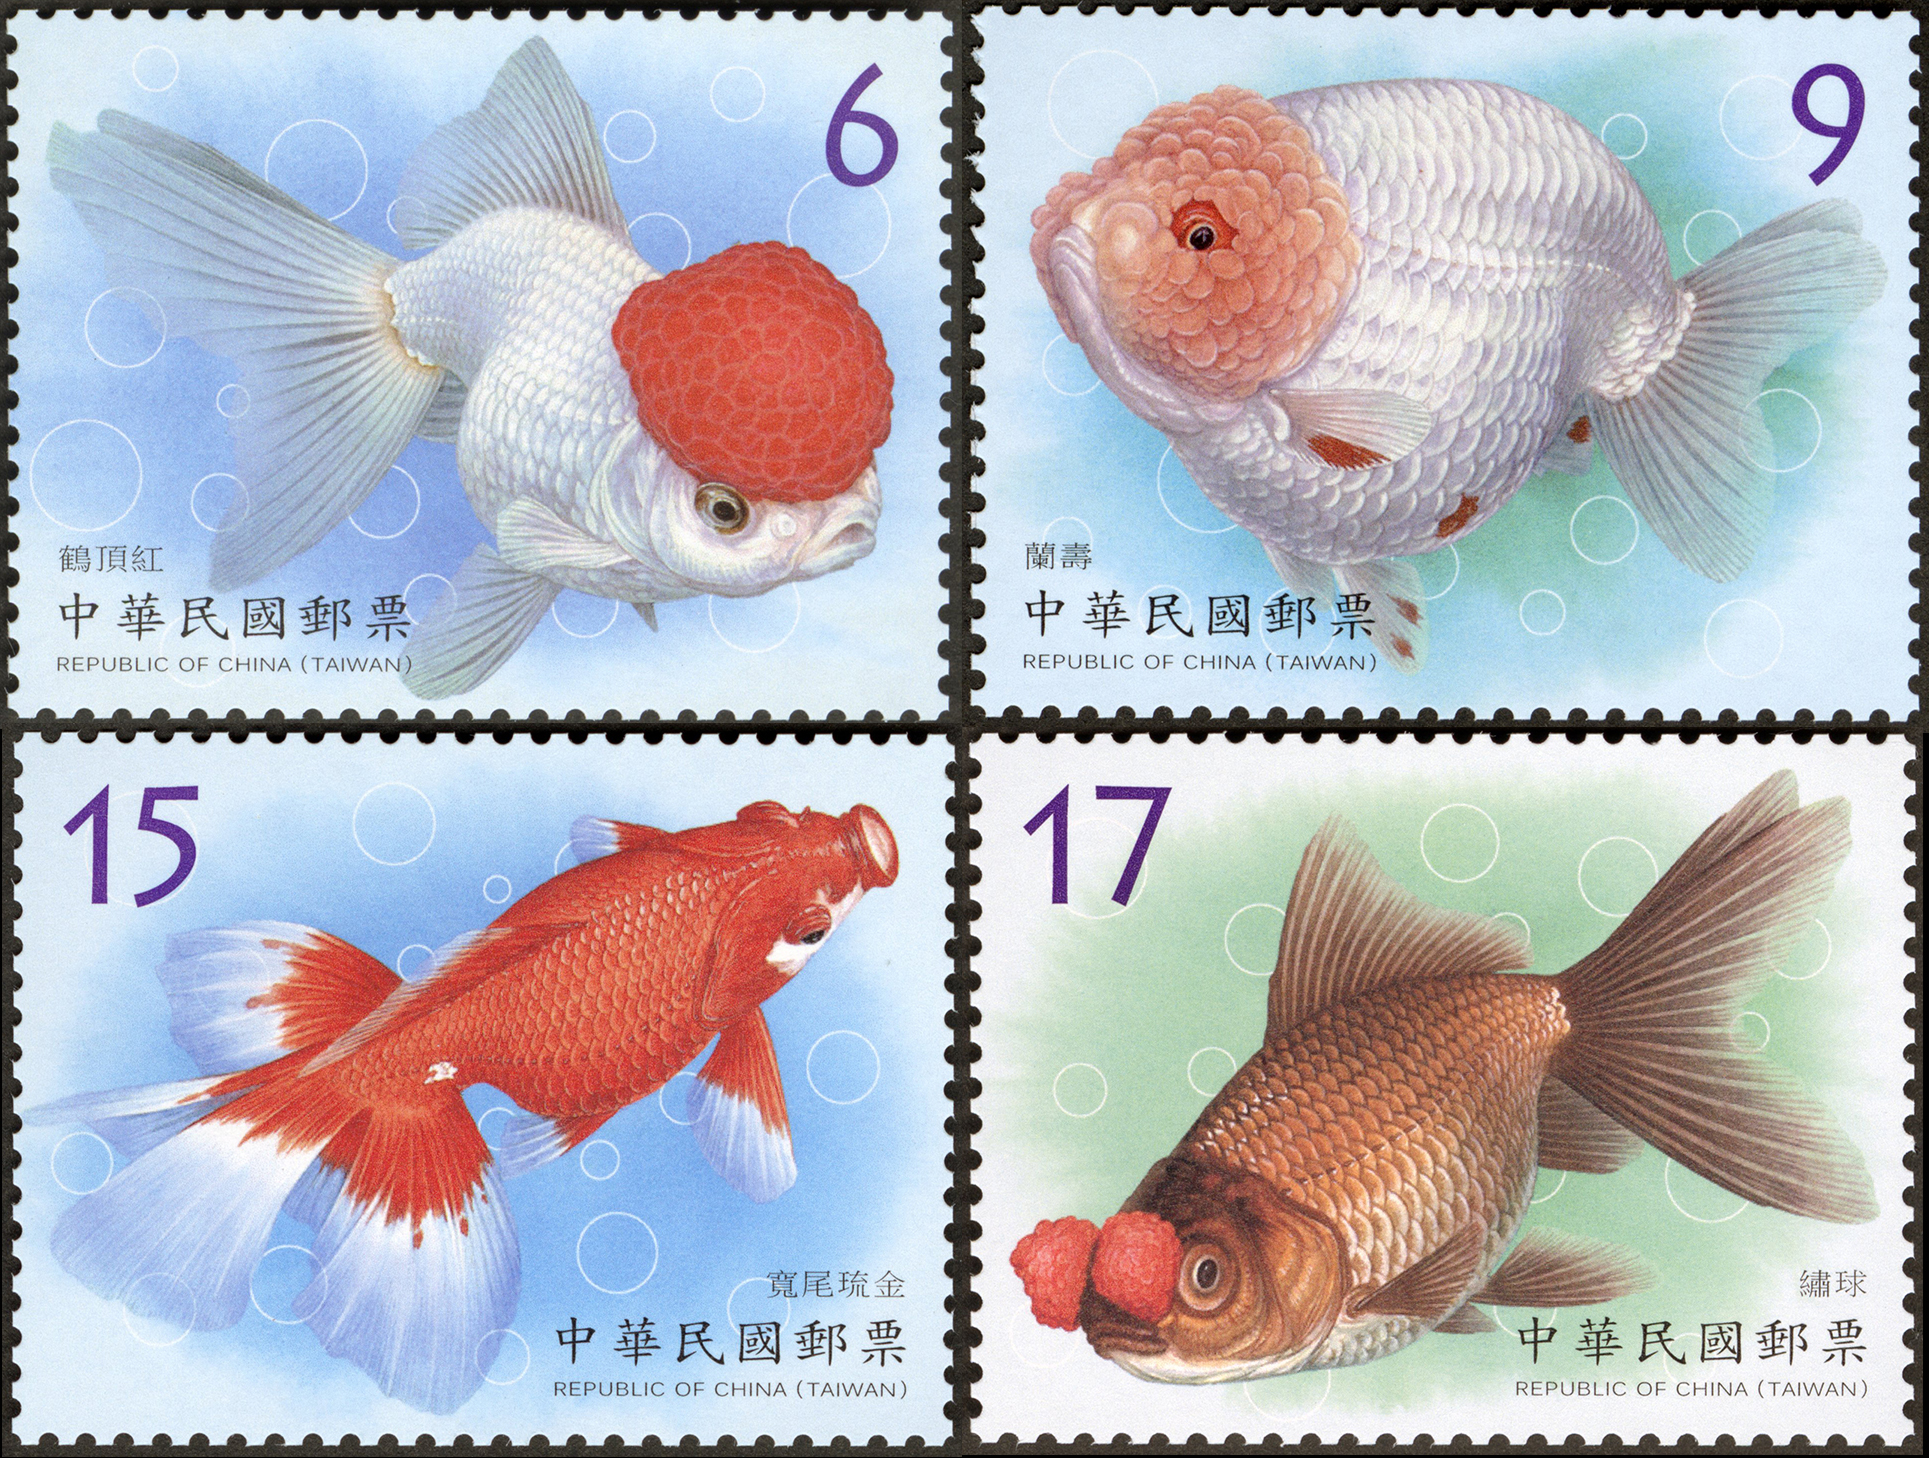 Aquatic Life Postage Stamps — Goldfish (II)